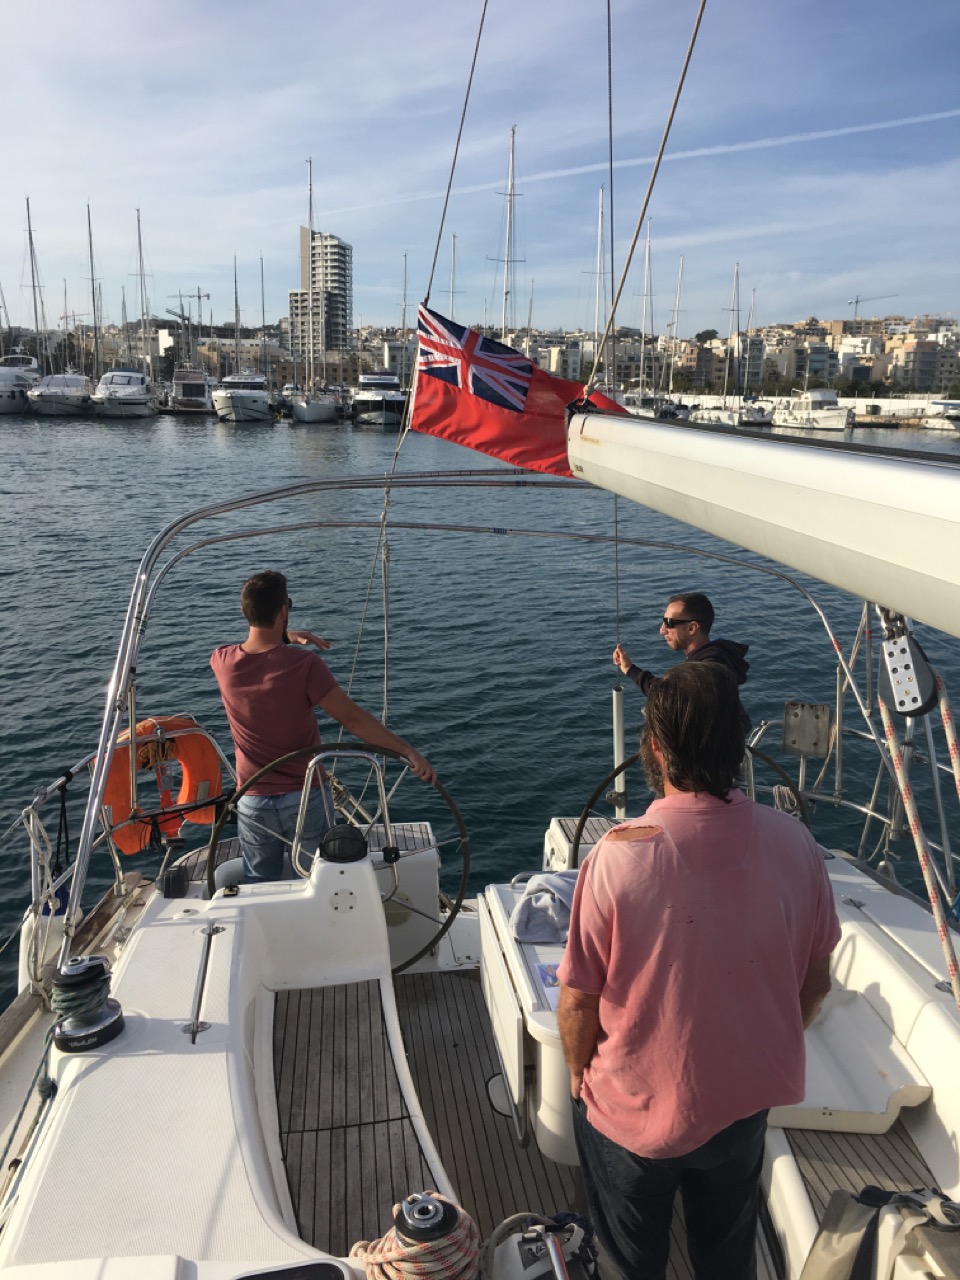 yachtmaster course malta